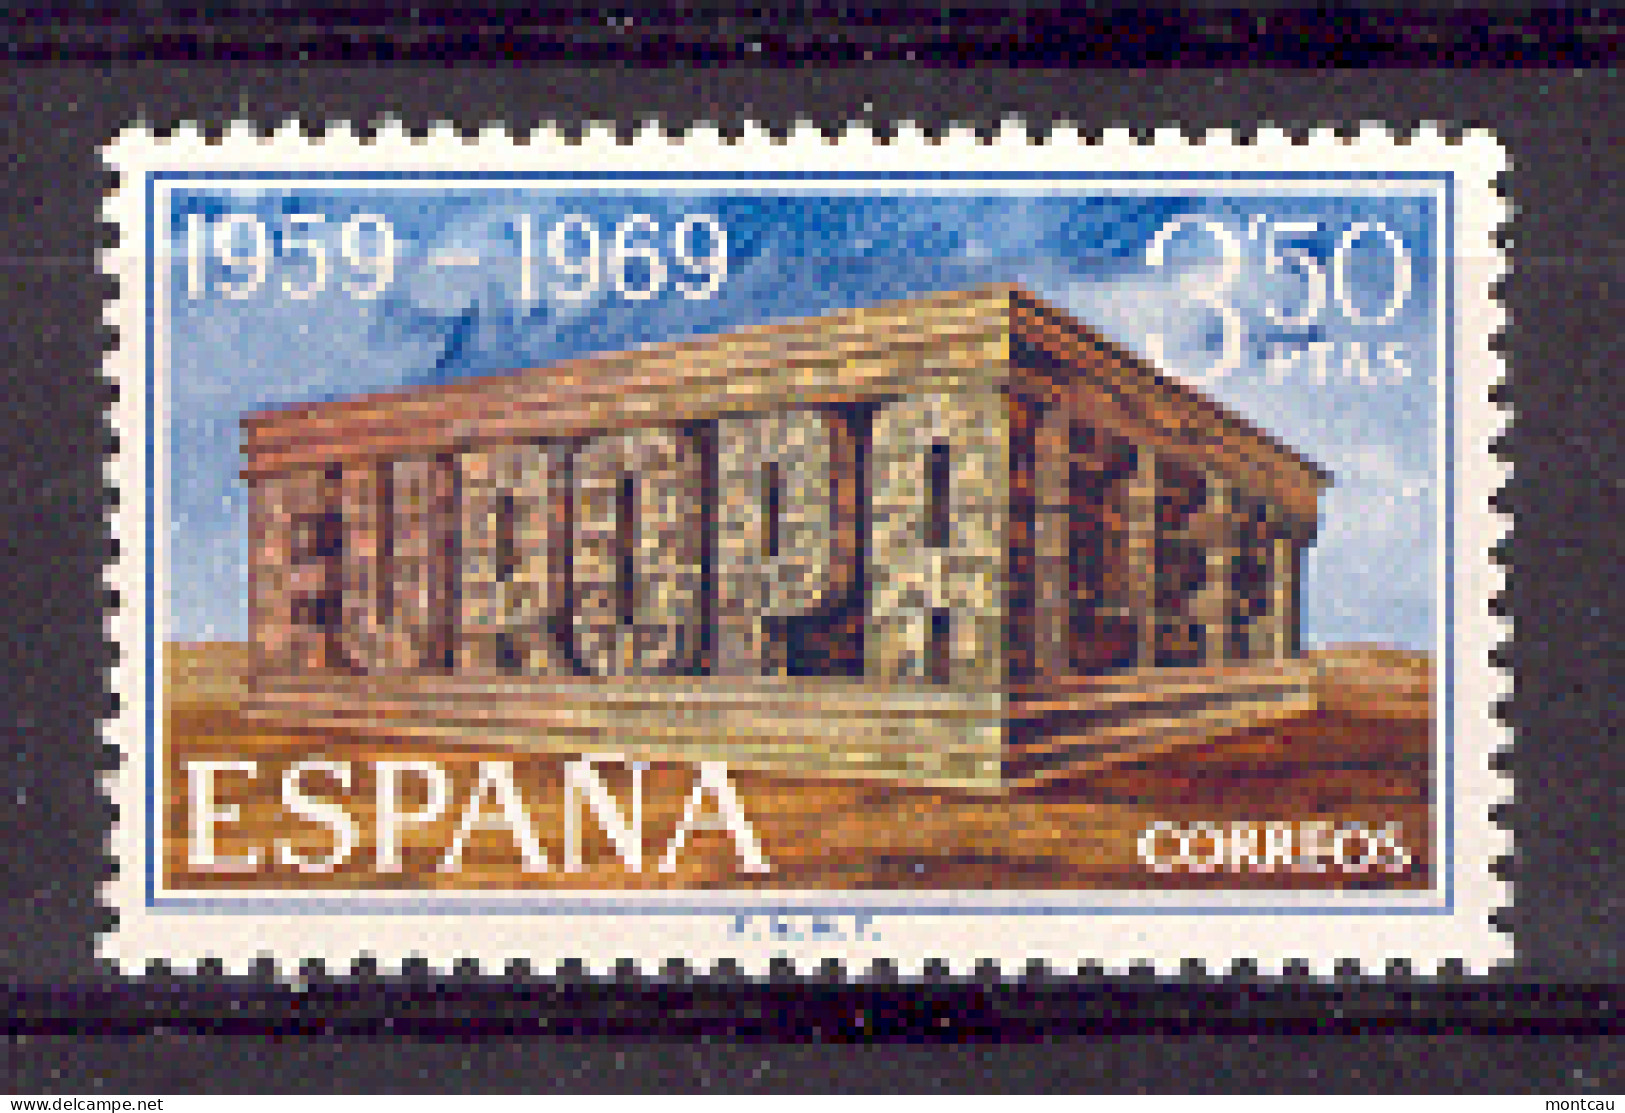 Spain 1969 - Europa Ed 1921 (**) - 1969